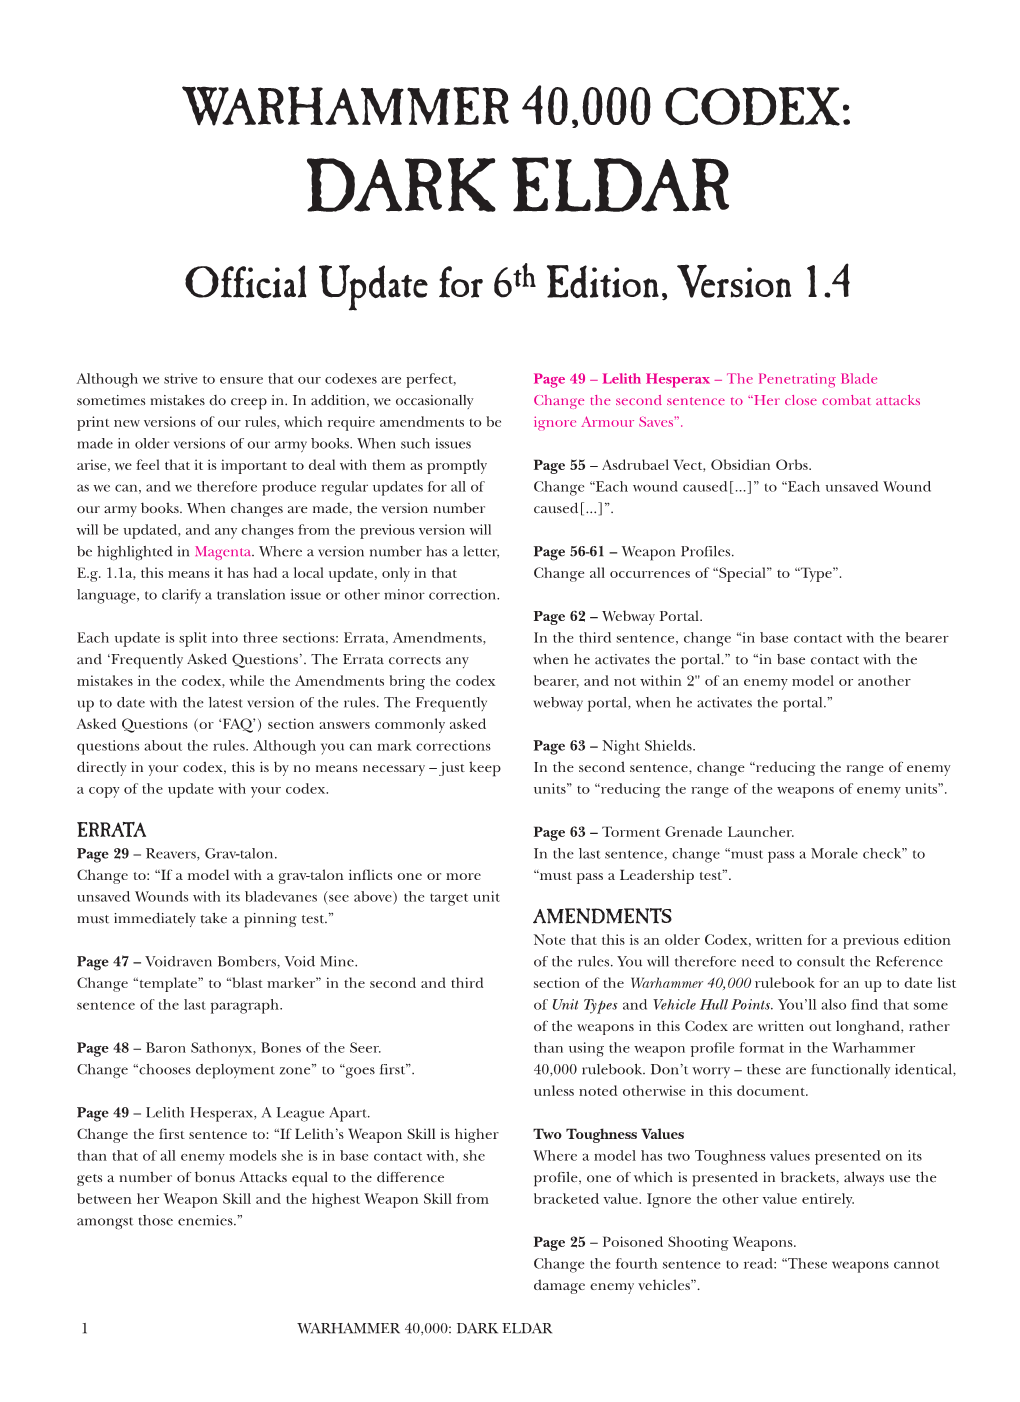 DARK ELDAR Official Update for 6 Th Edition, Version 1.4